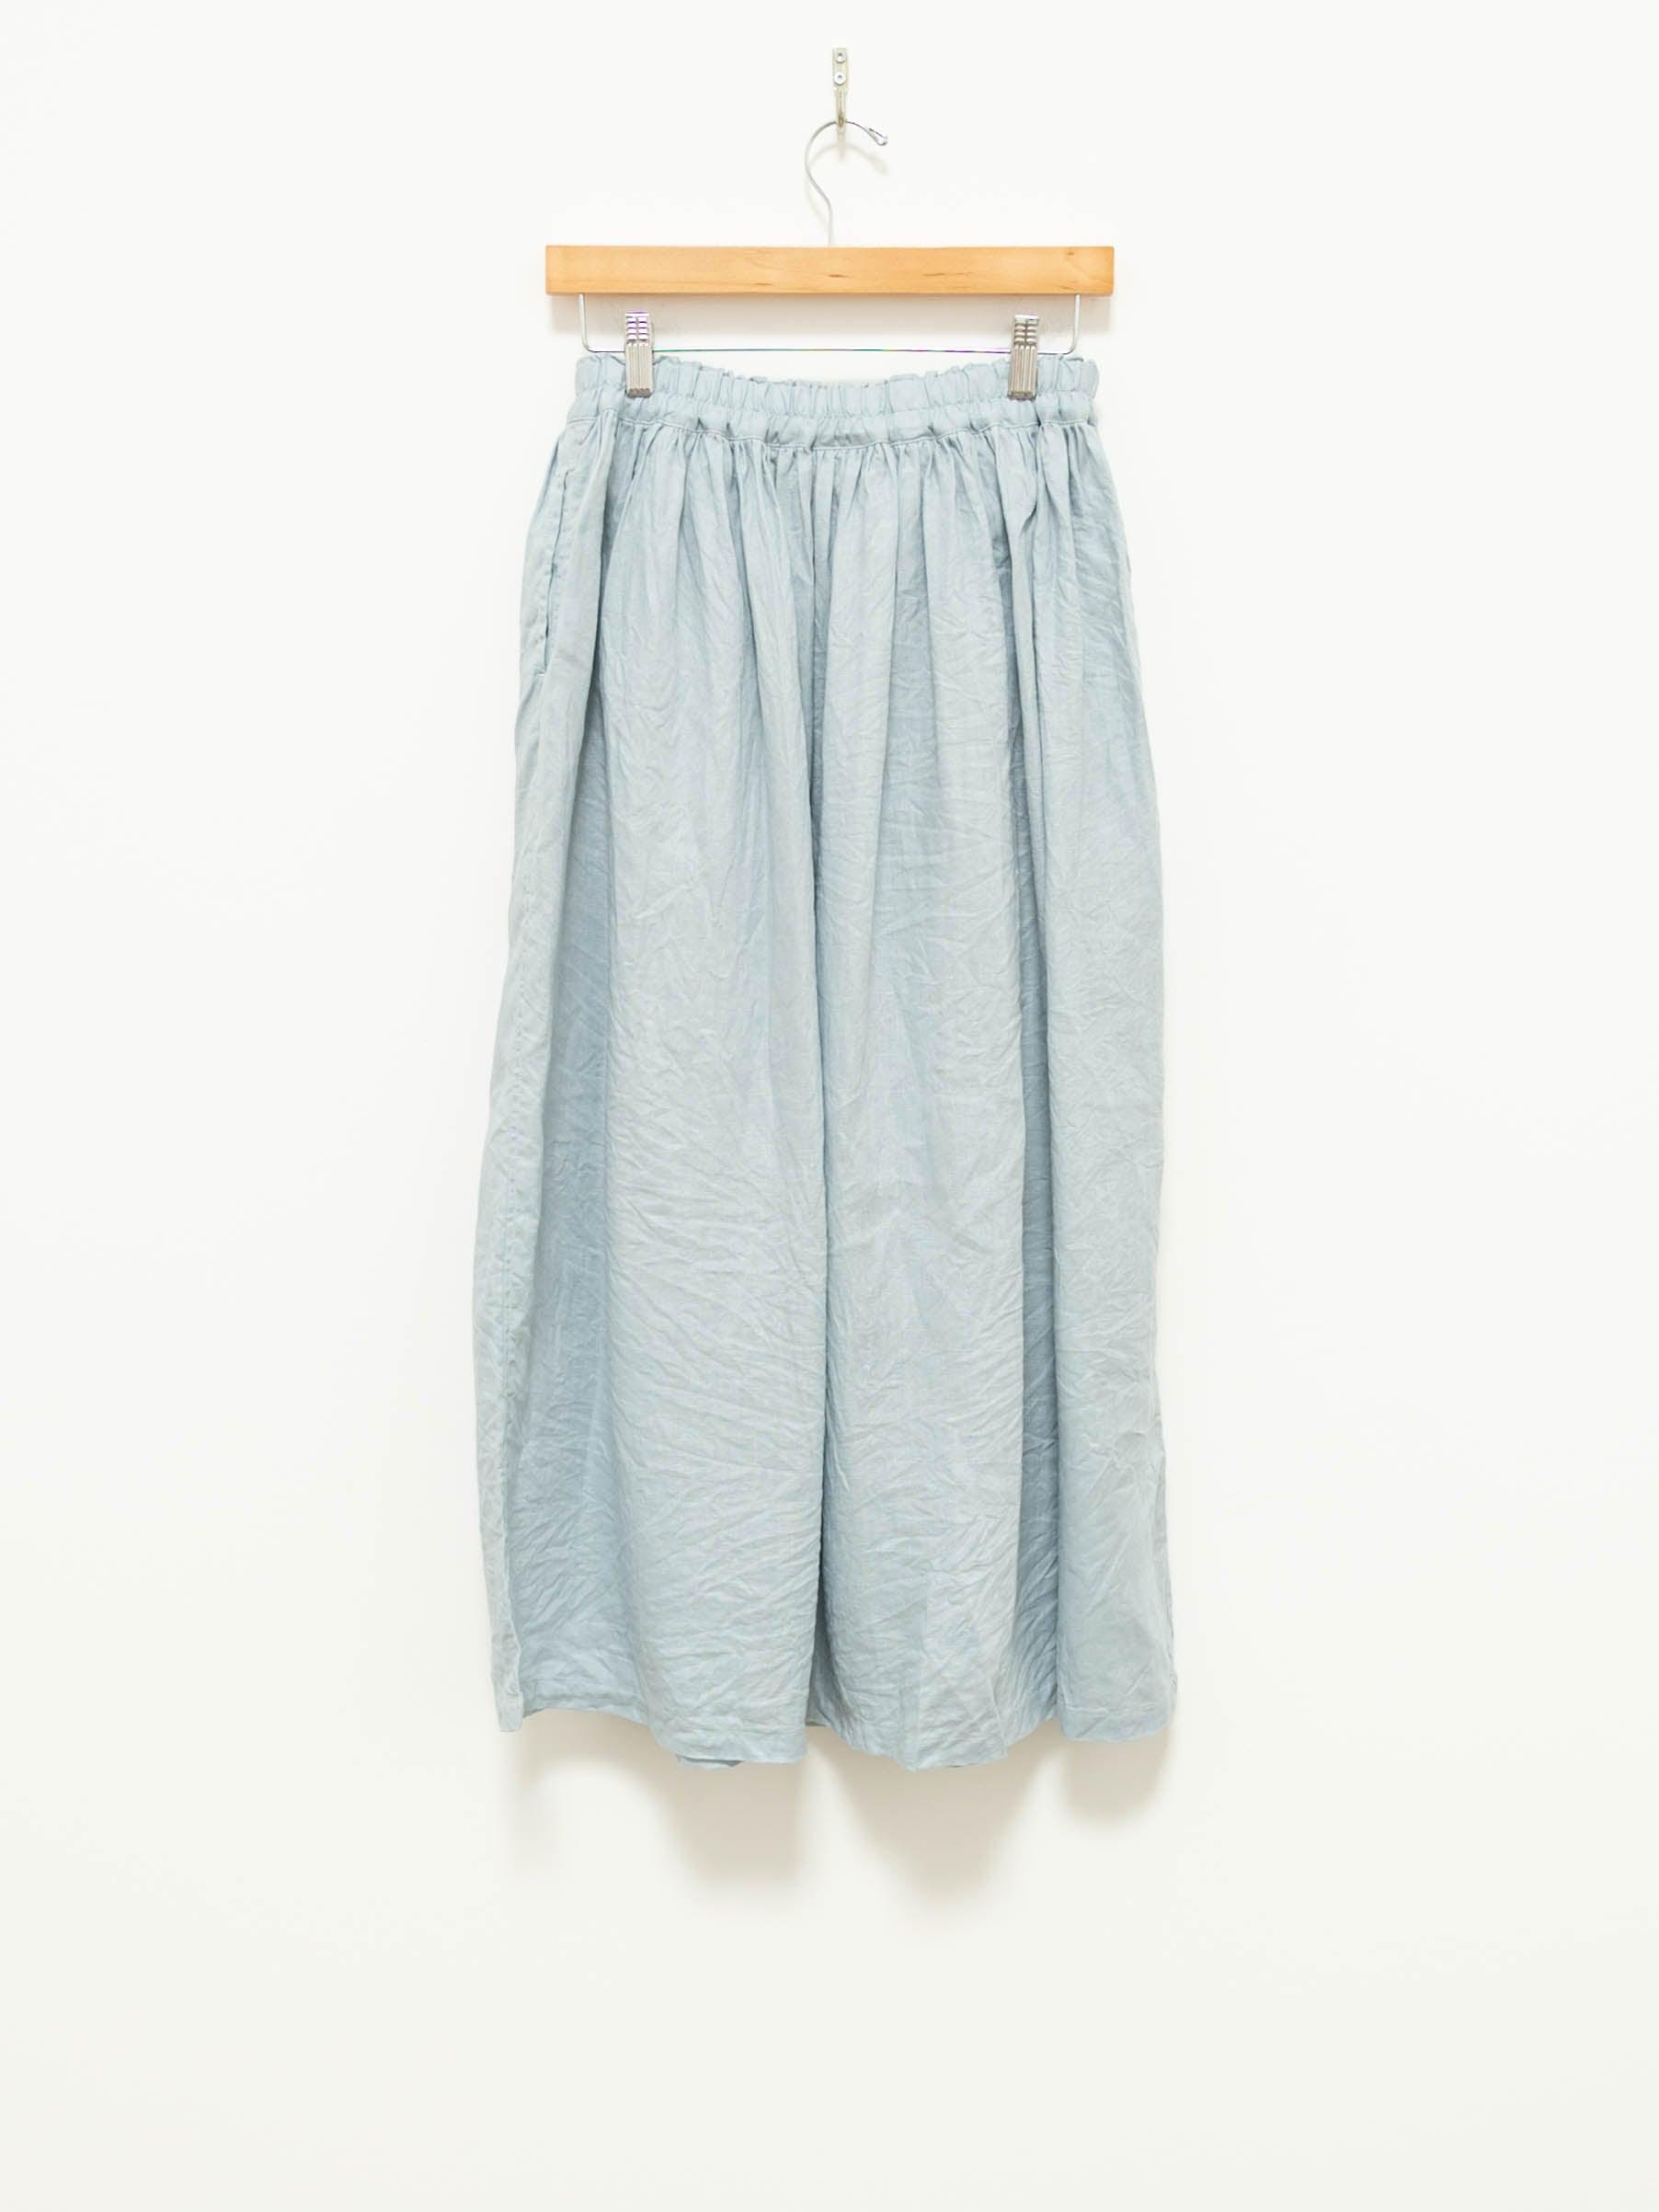 Namu Shop - Ichi Antiquites Color Linen Skirt - Light Blue